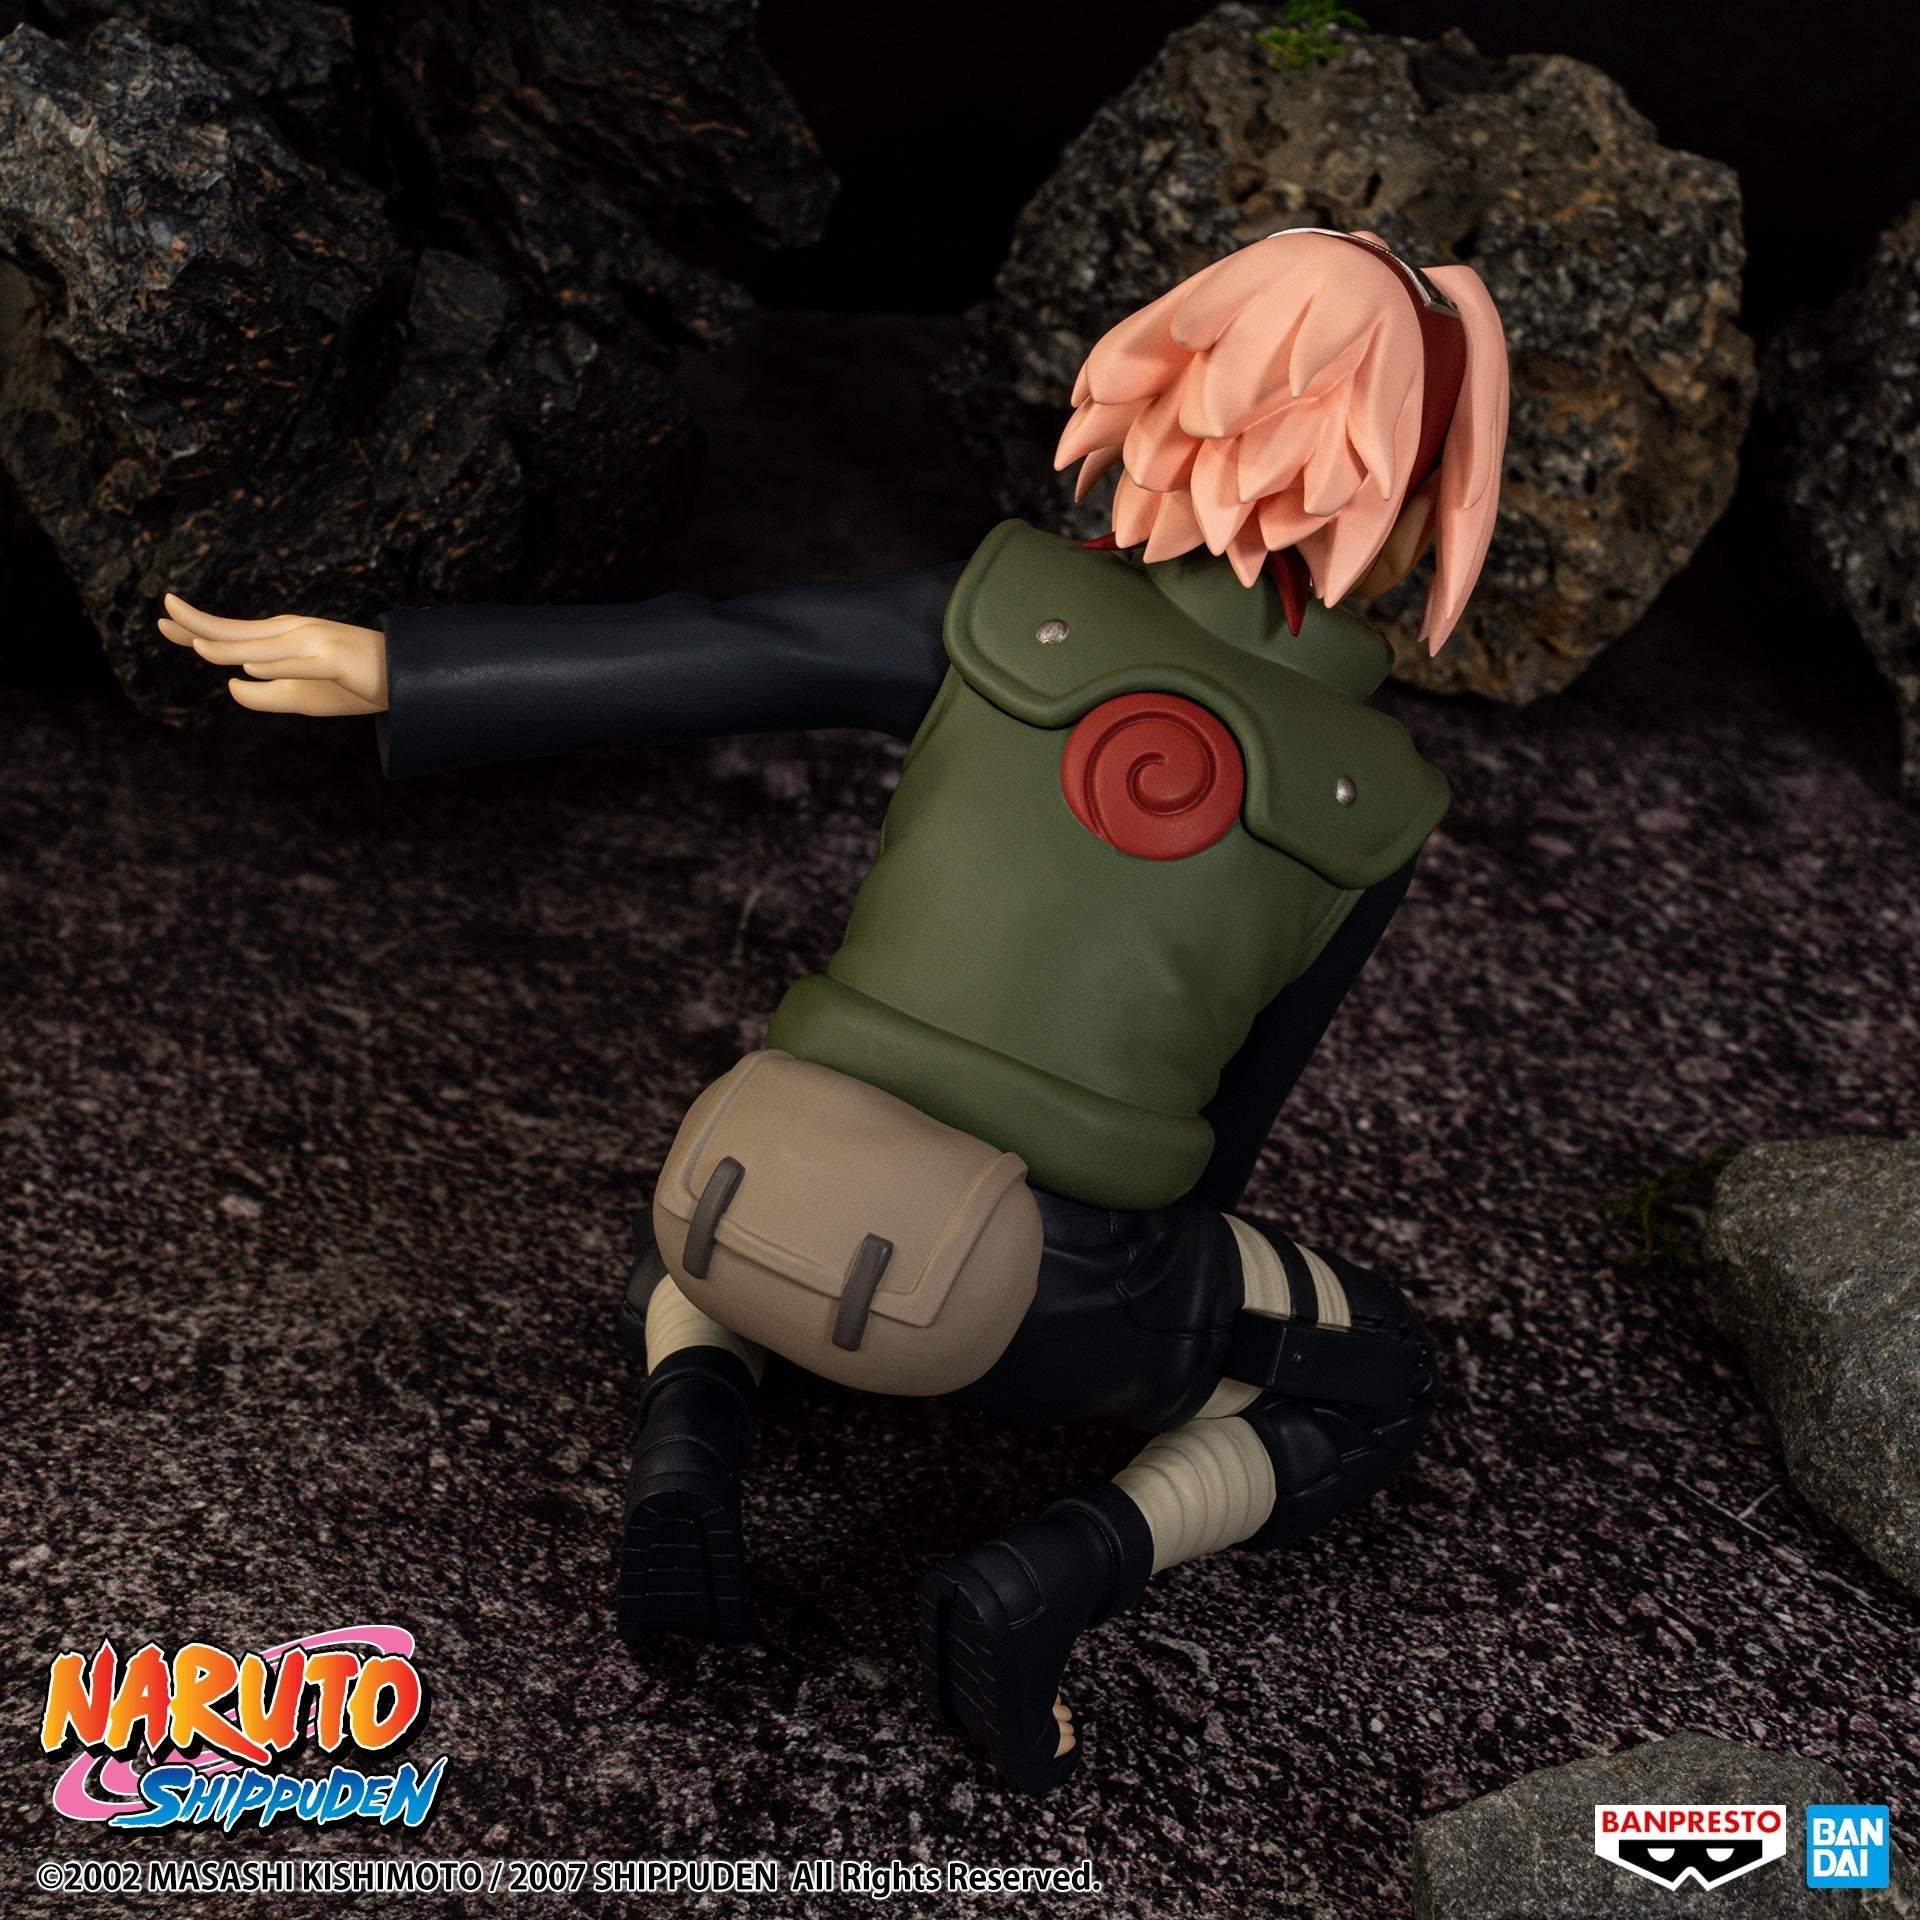 Naruto Shippuden - Haruno Sakura Panel Spectacle Figure image count 8